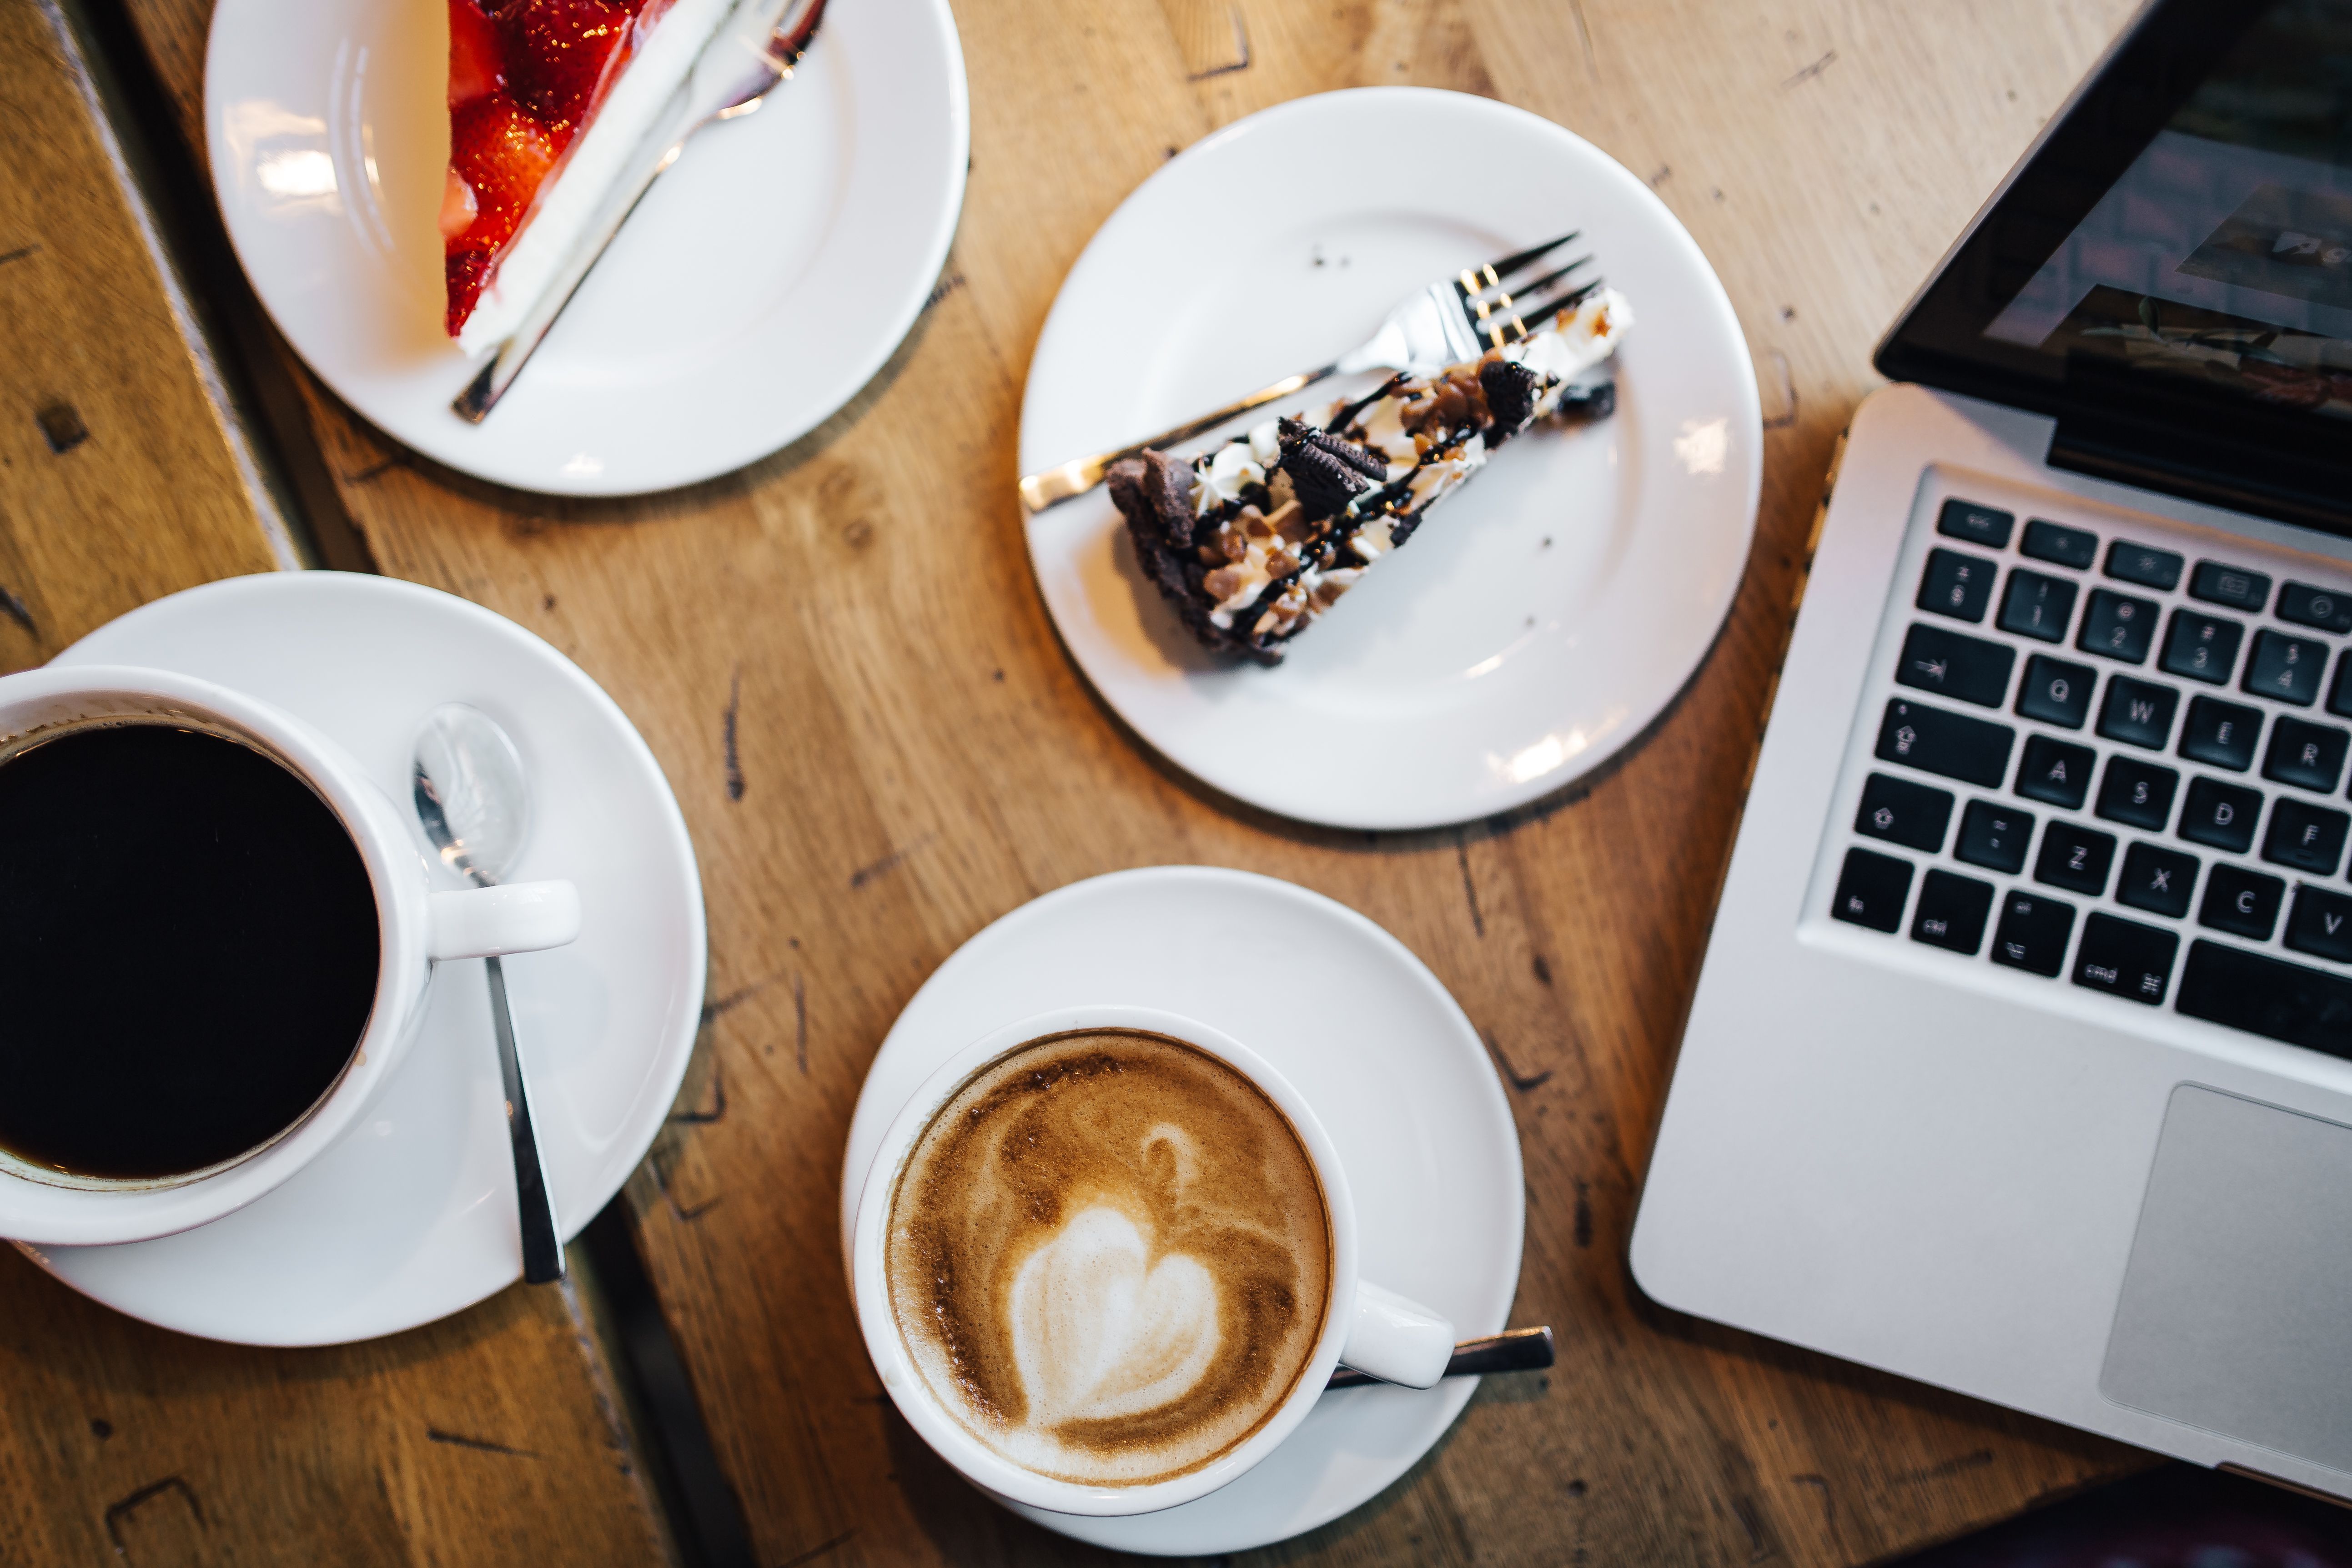 kaboompics_Top View, Coffee with Heart Shape, cake, Macbook Laptop